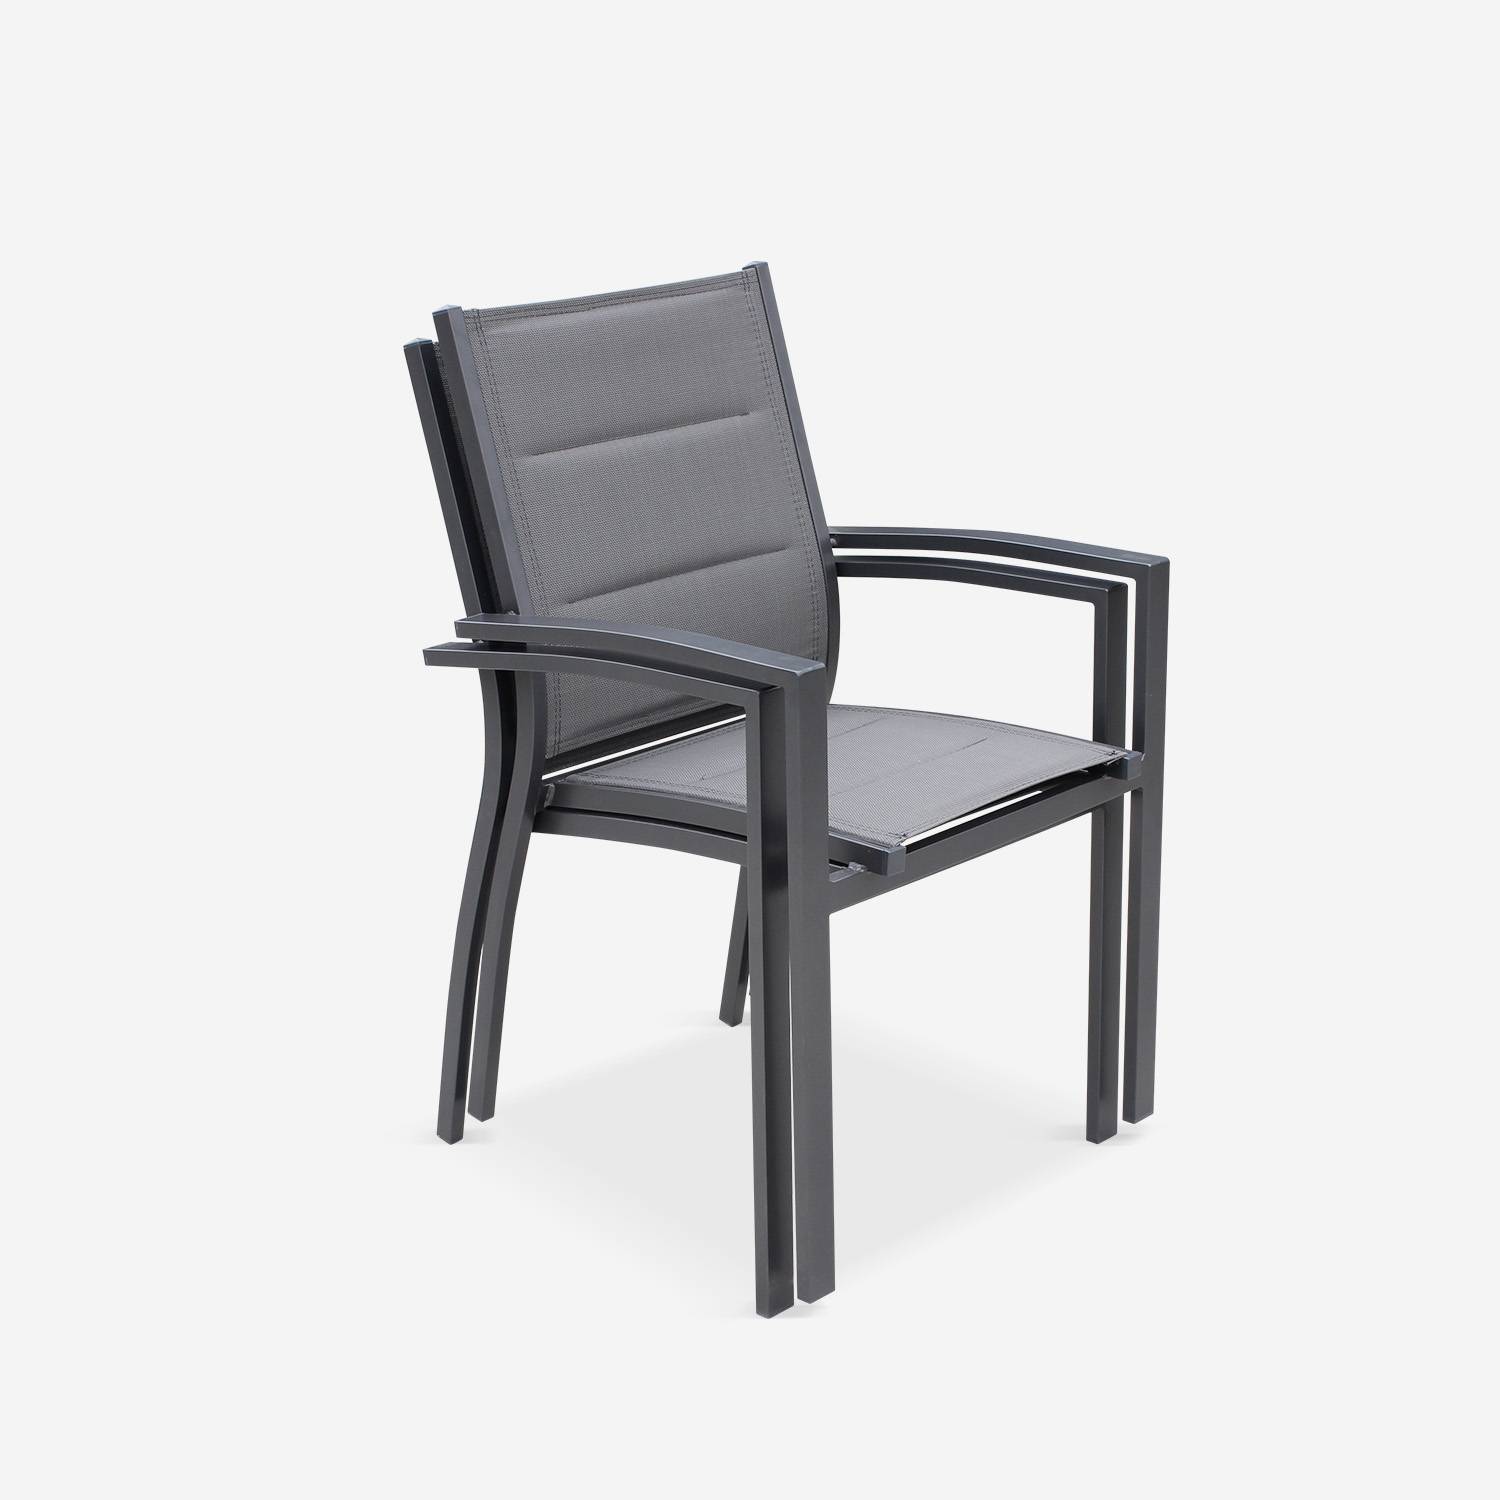 Conjunto de 2 cadeiras - Chicago / Odenton / Philadelphia Antracite - alumínio antracite e textileno cinzento escuro, empilháveis Photo5